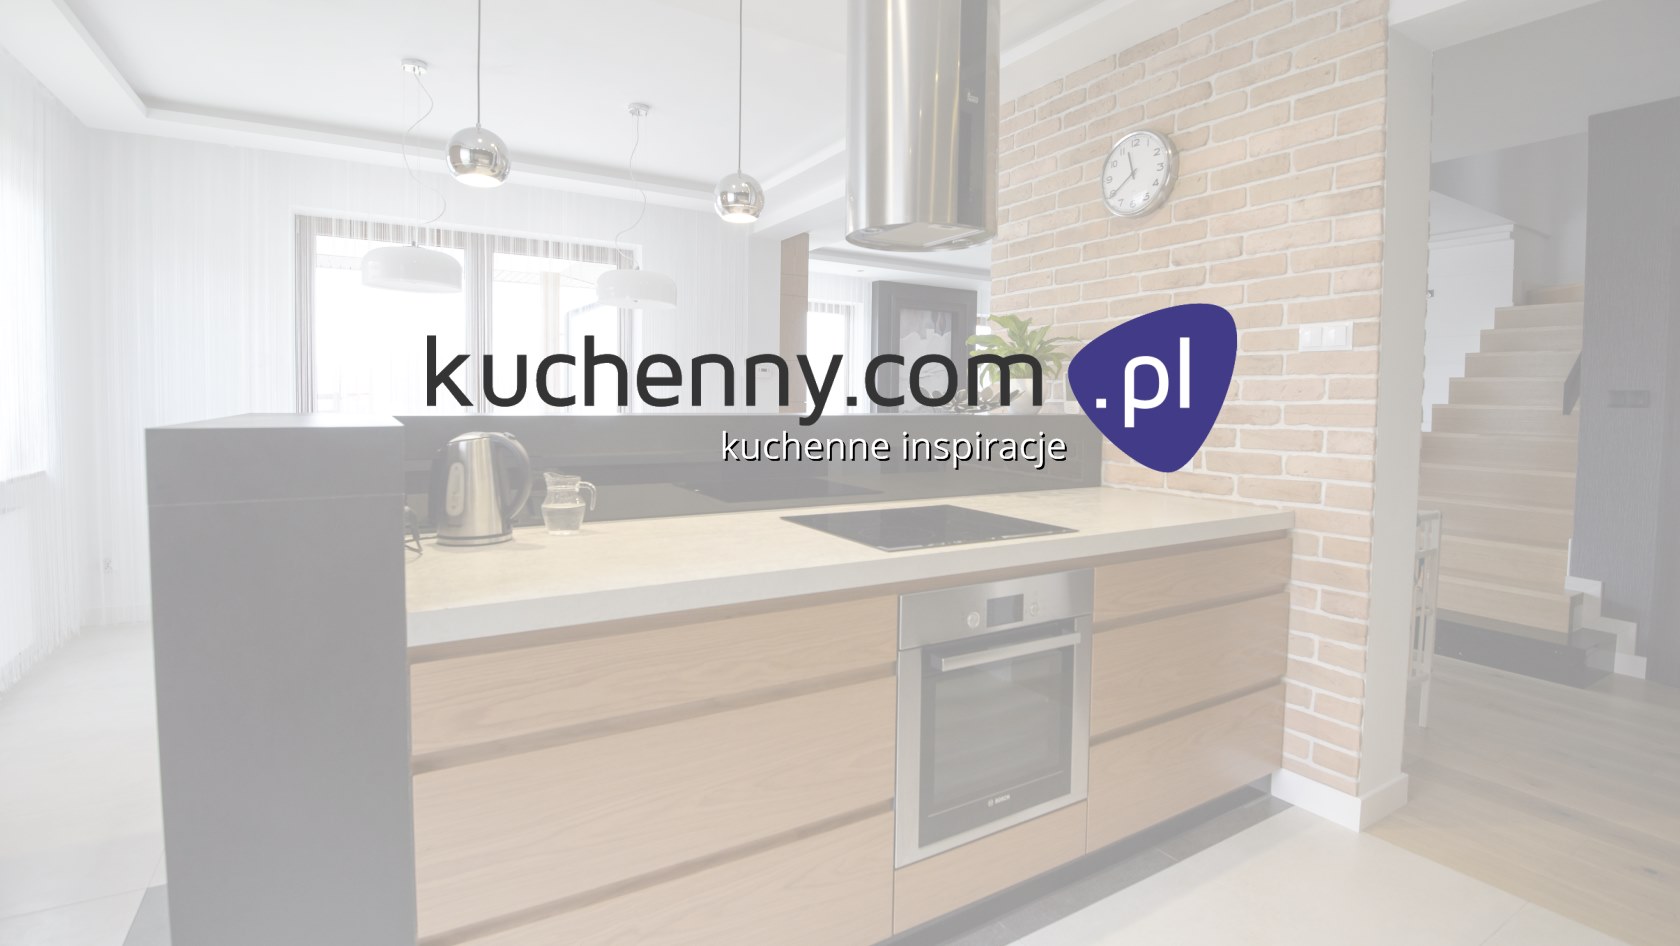 kuchenny.com.pl